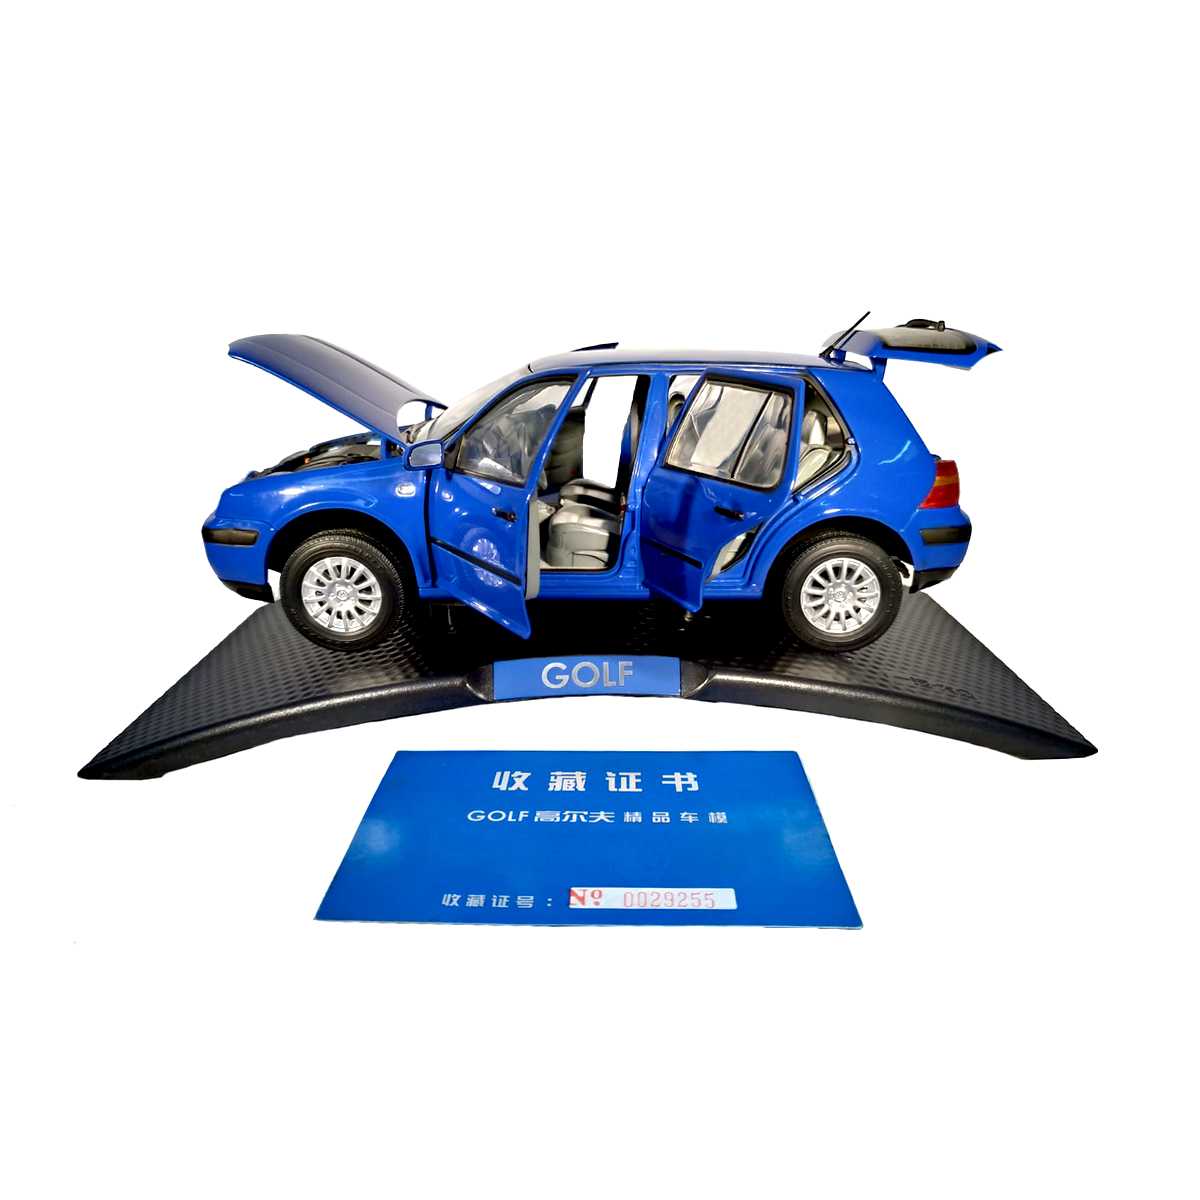 Volkswagen Vw Golf 4 Geração Paudi Models Escala 1:18 cor azul